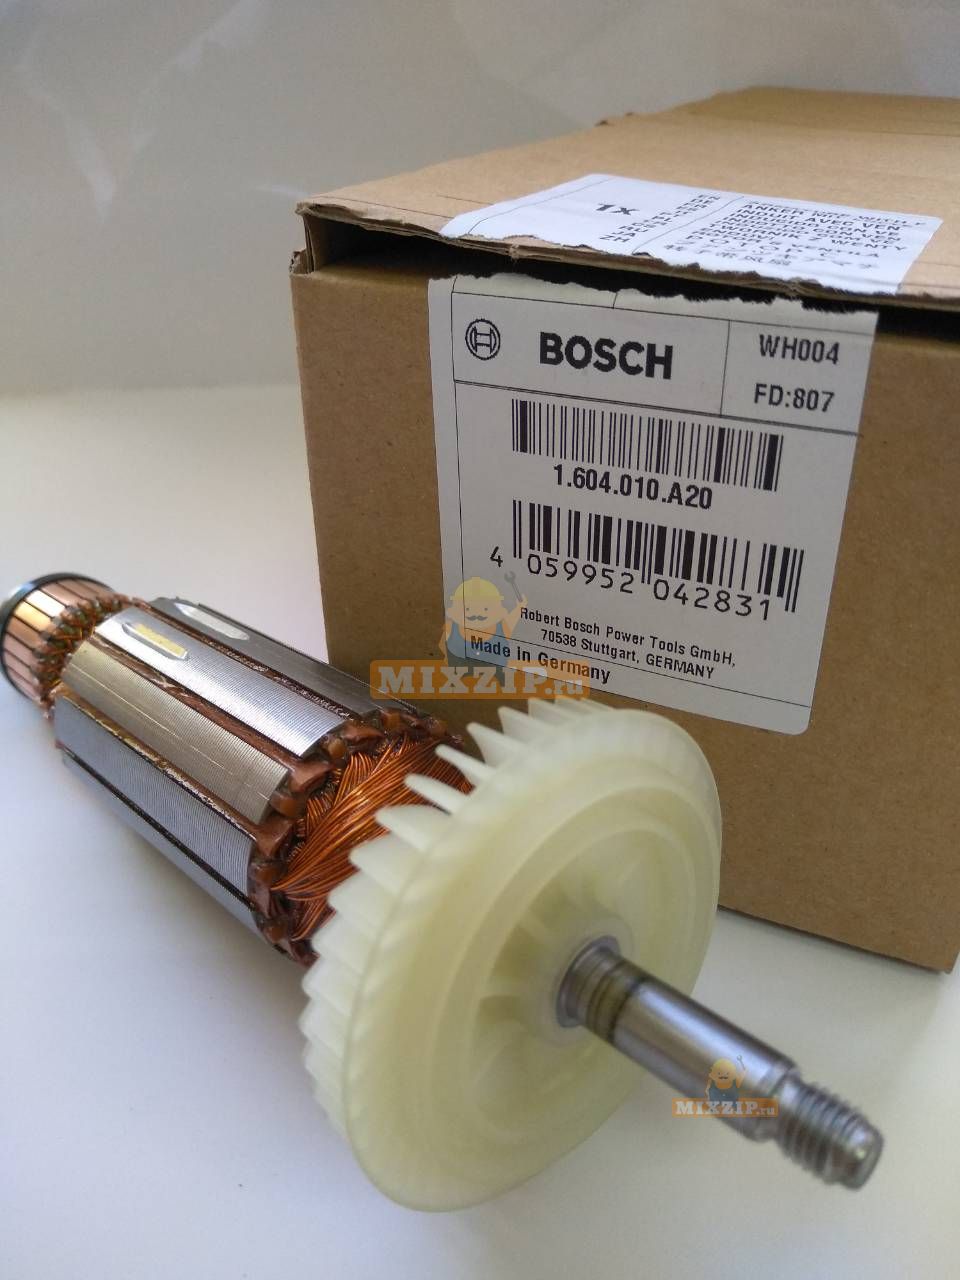  болгарки Bosch GWS 1000 (3601H28400) 1604010A20 по низкой цене .